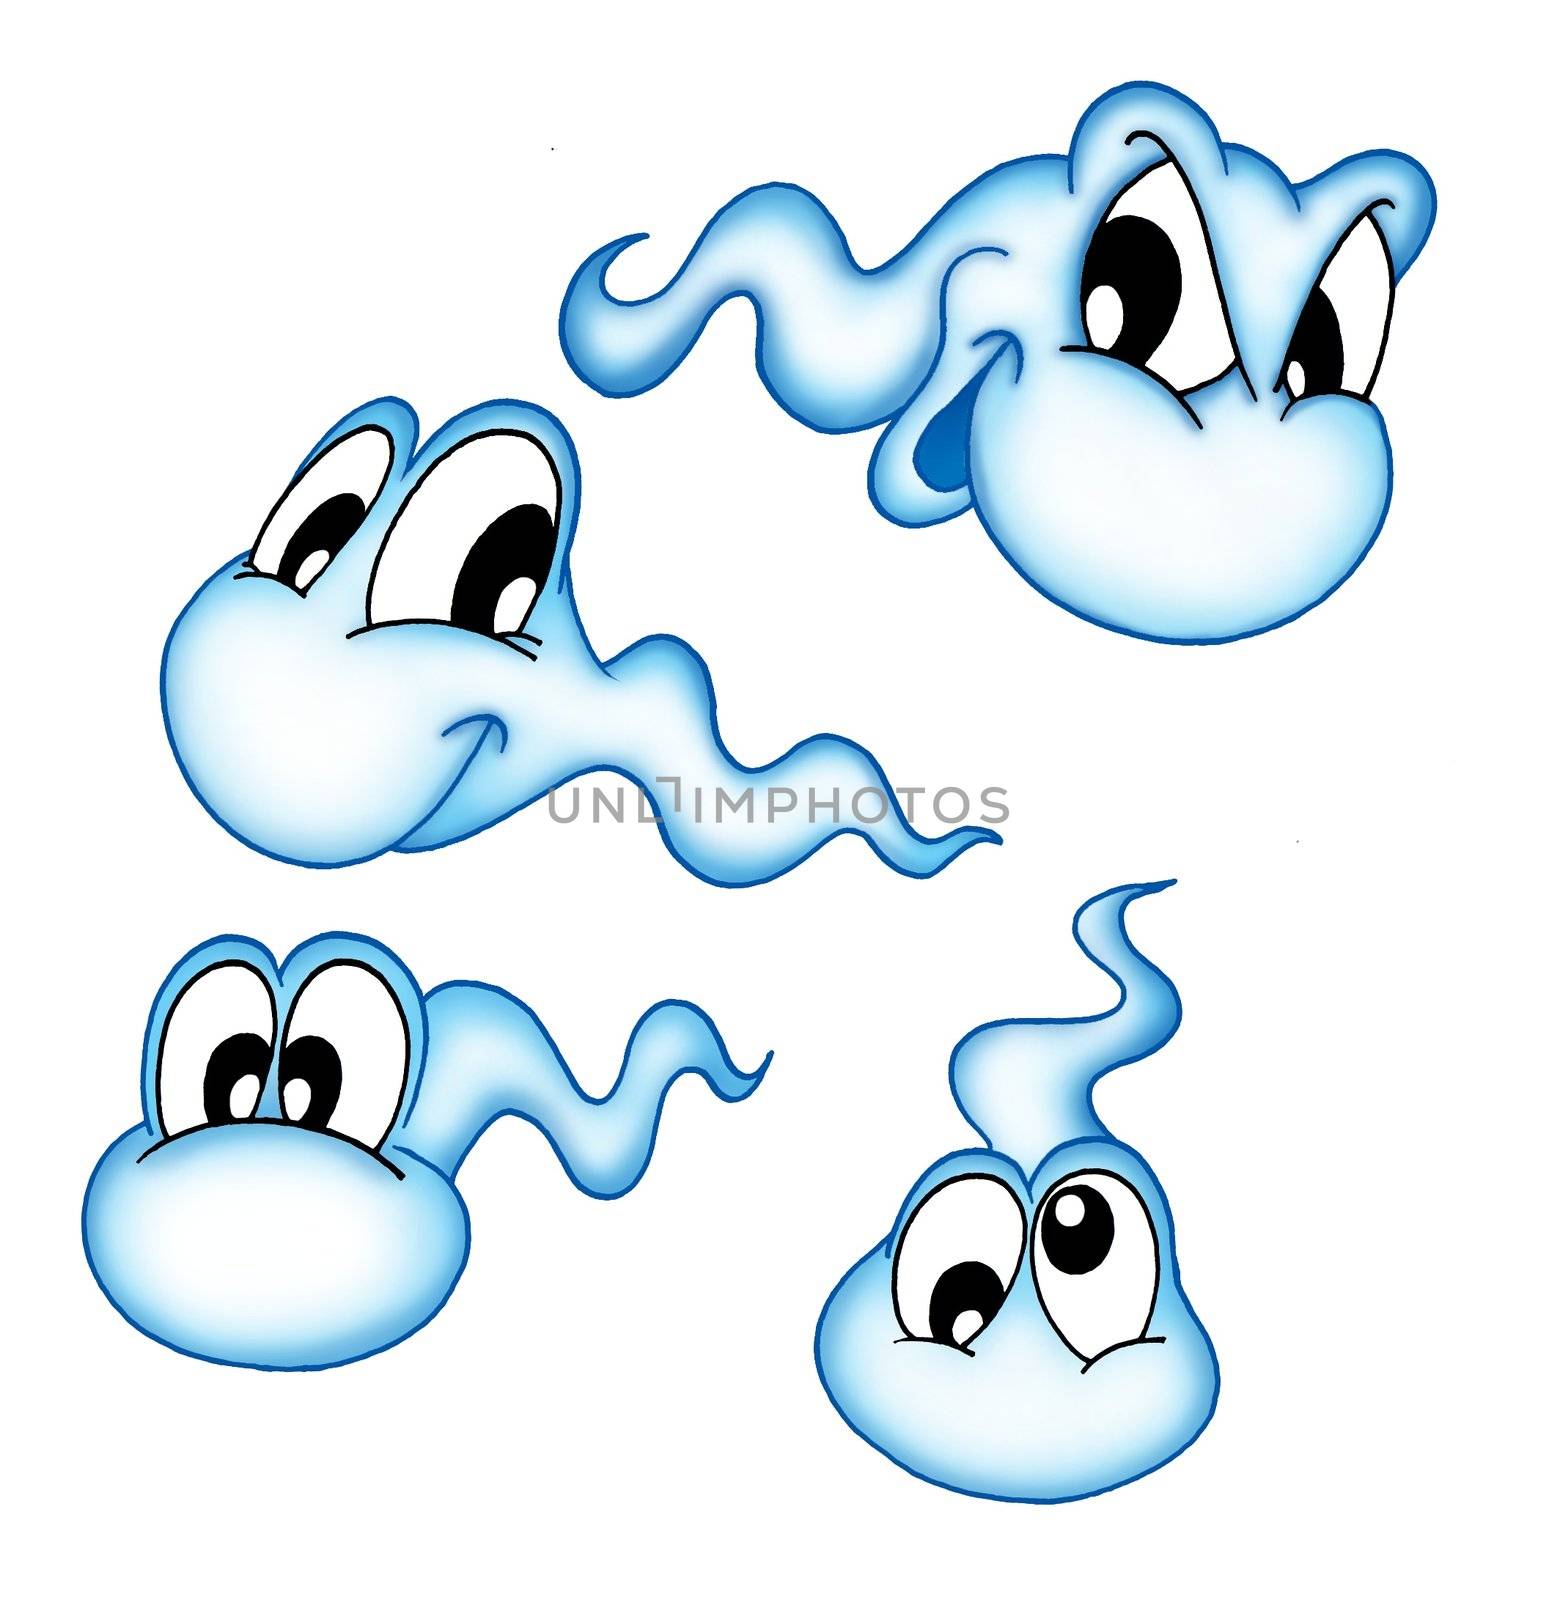 Color illustration of funny blue sperms.